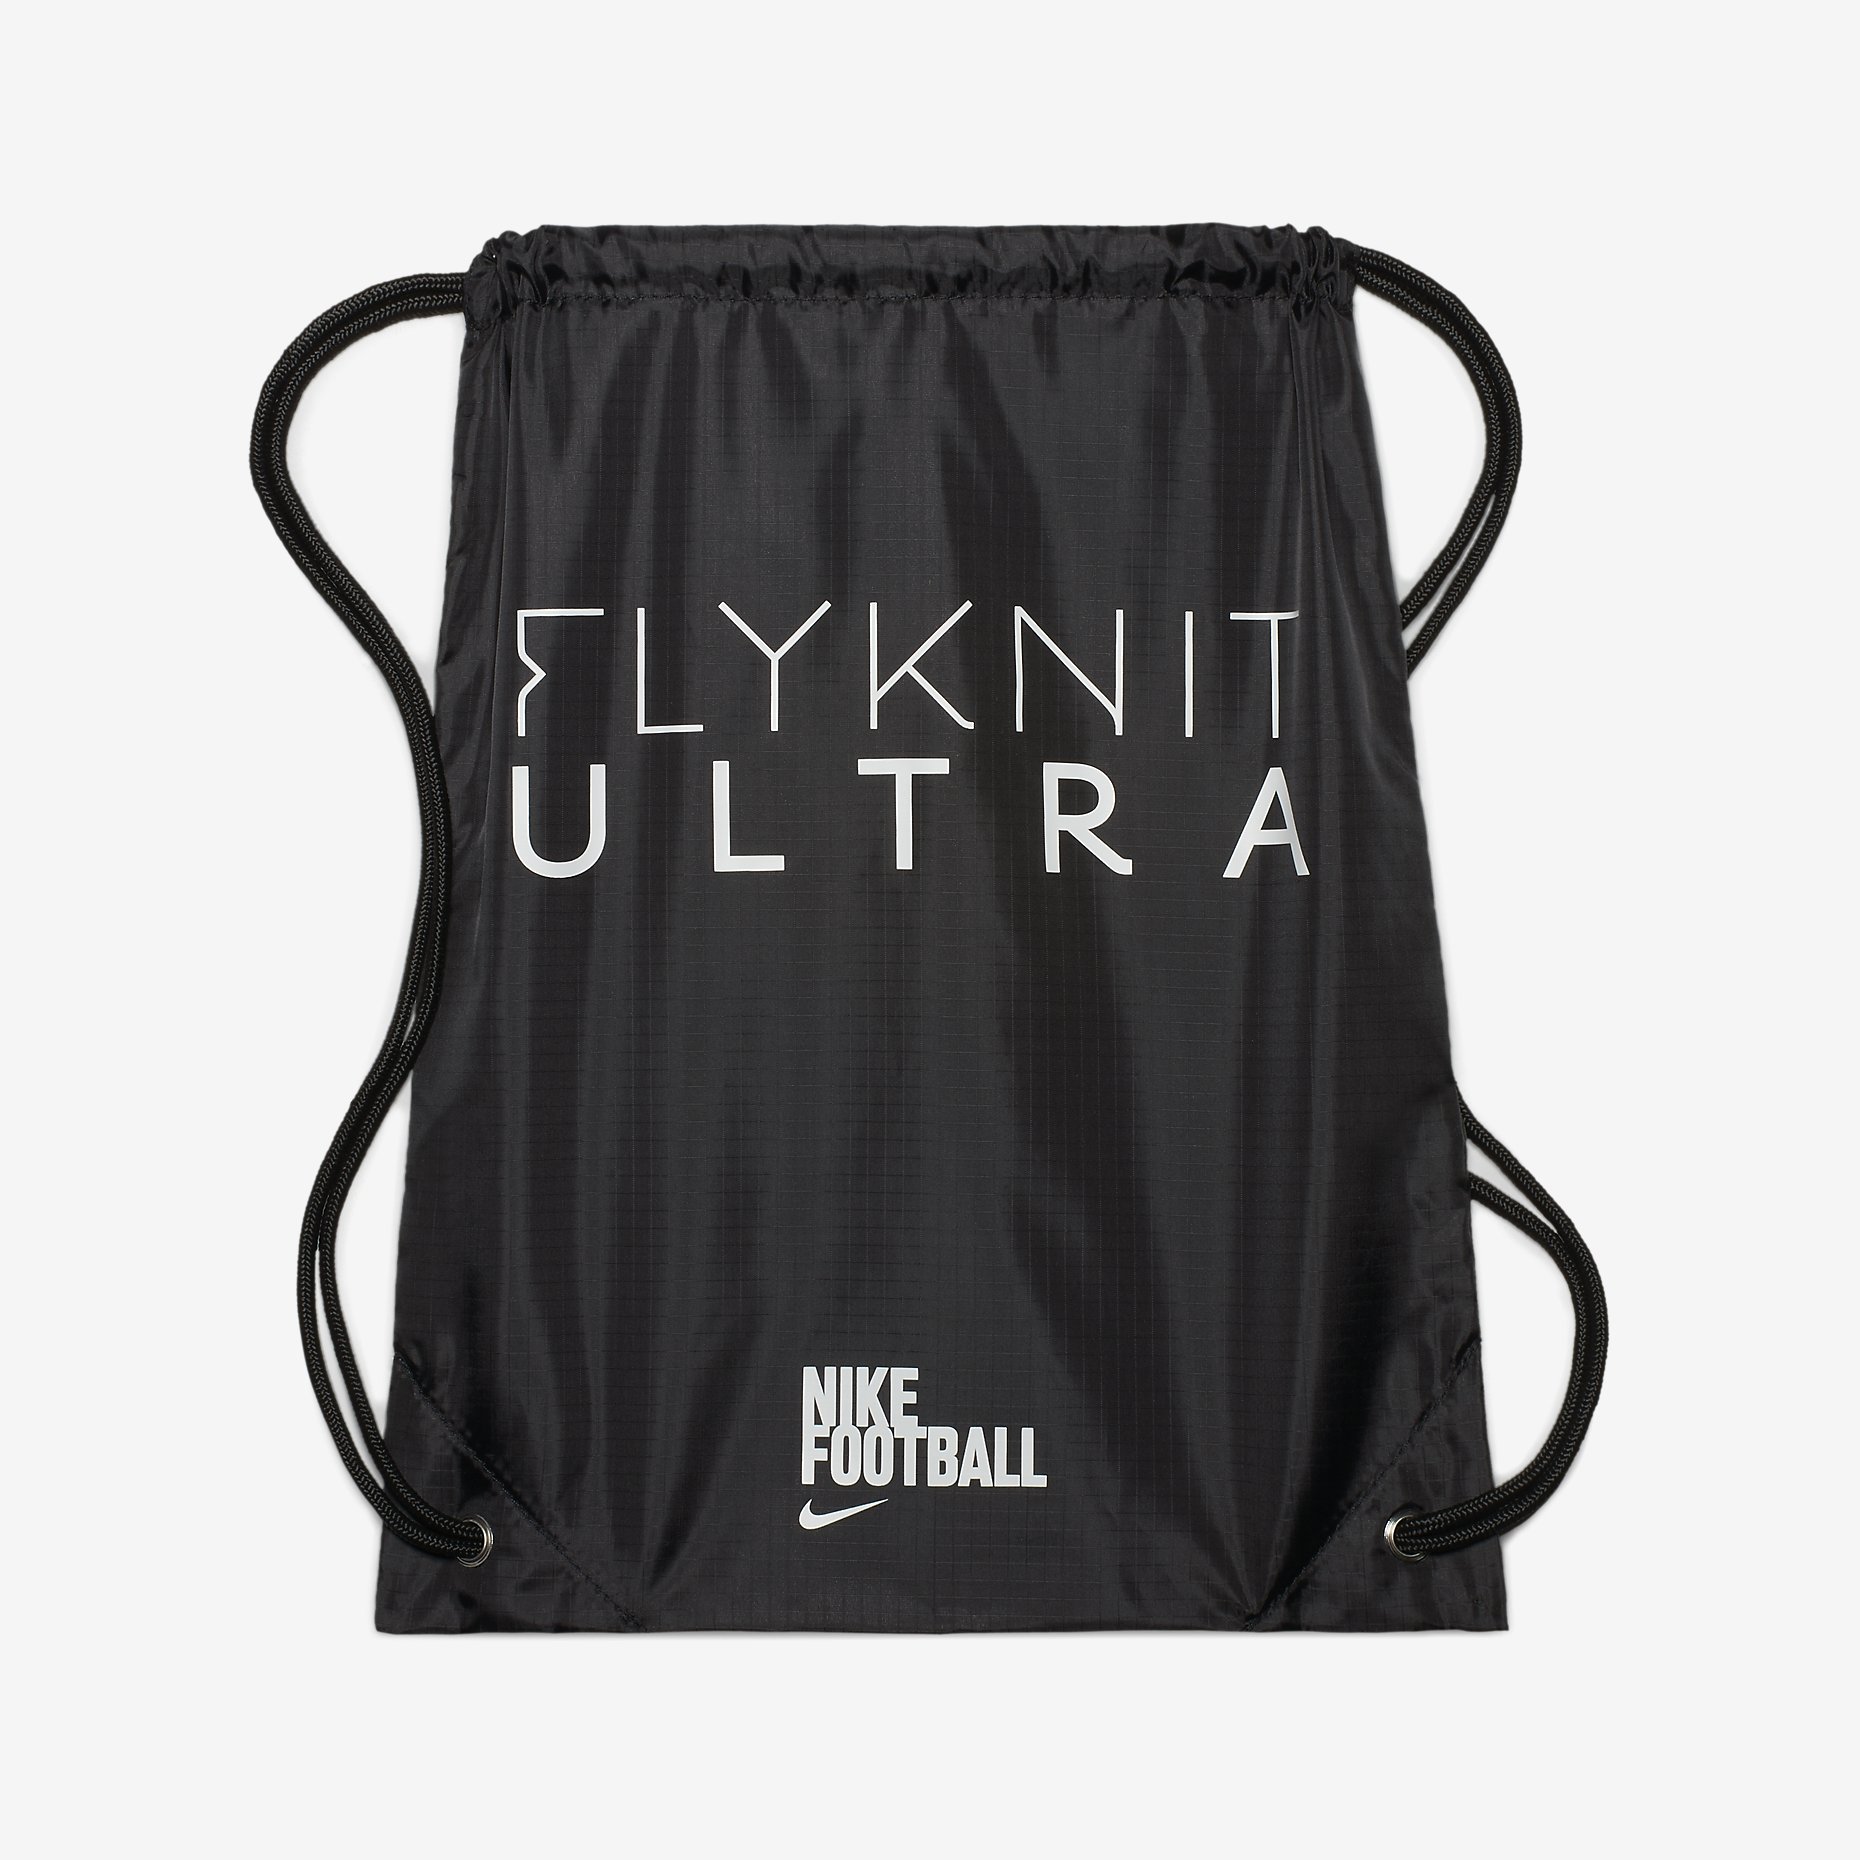 Nike Flyknit Ultra FG Play Ice - Black / Gamma Blue / Black - Football ...